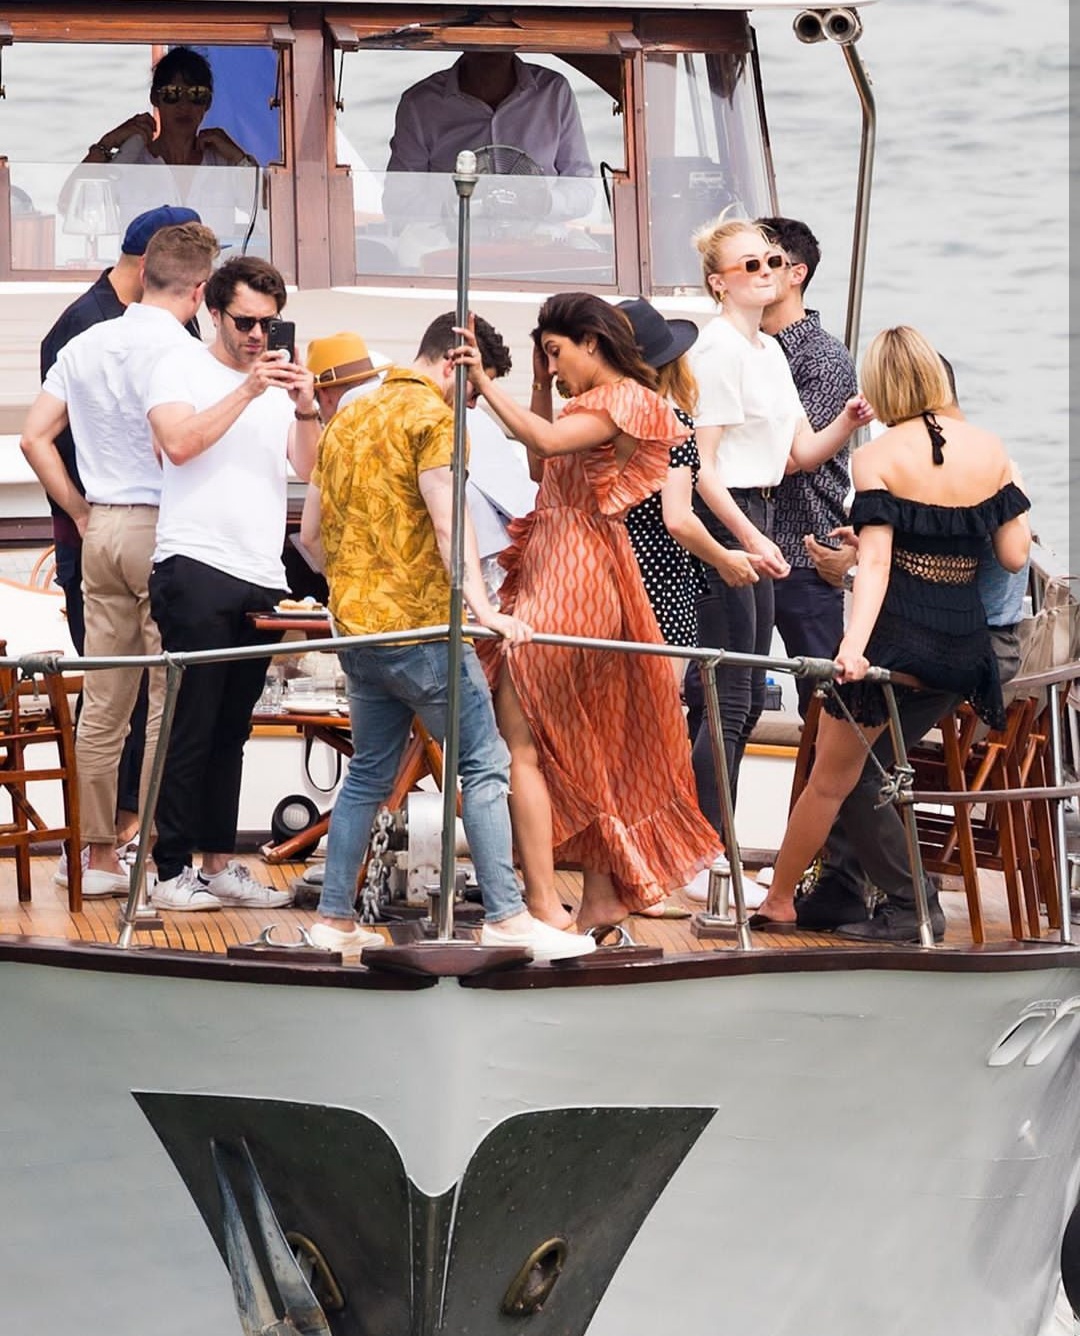 Priyanka Chopra And Nick Jonas' Pictures from the Jonas Parisian Cruise Goes Viral